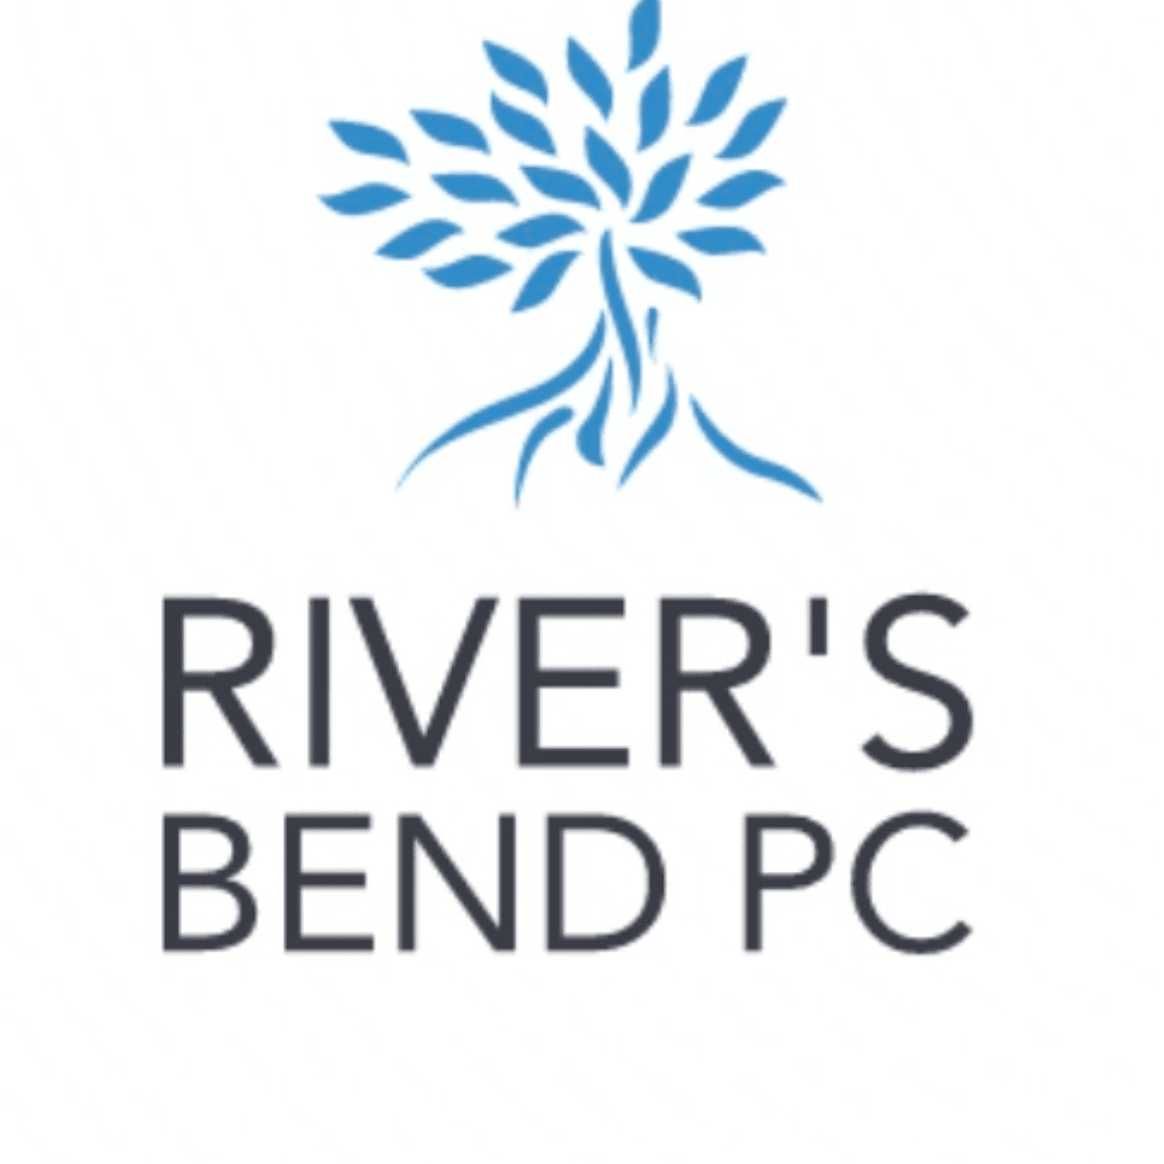 Rivers Bend PC